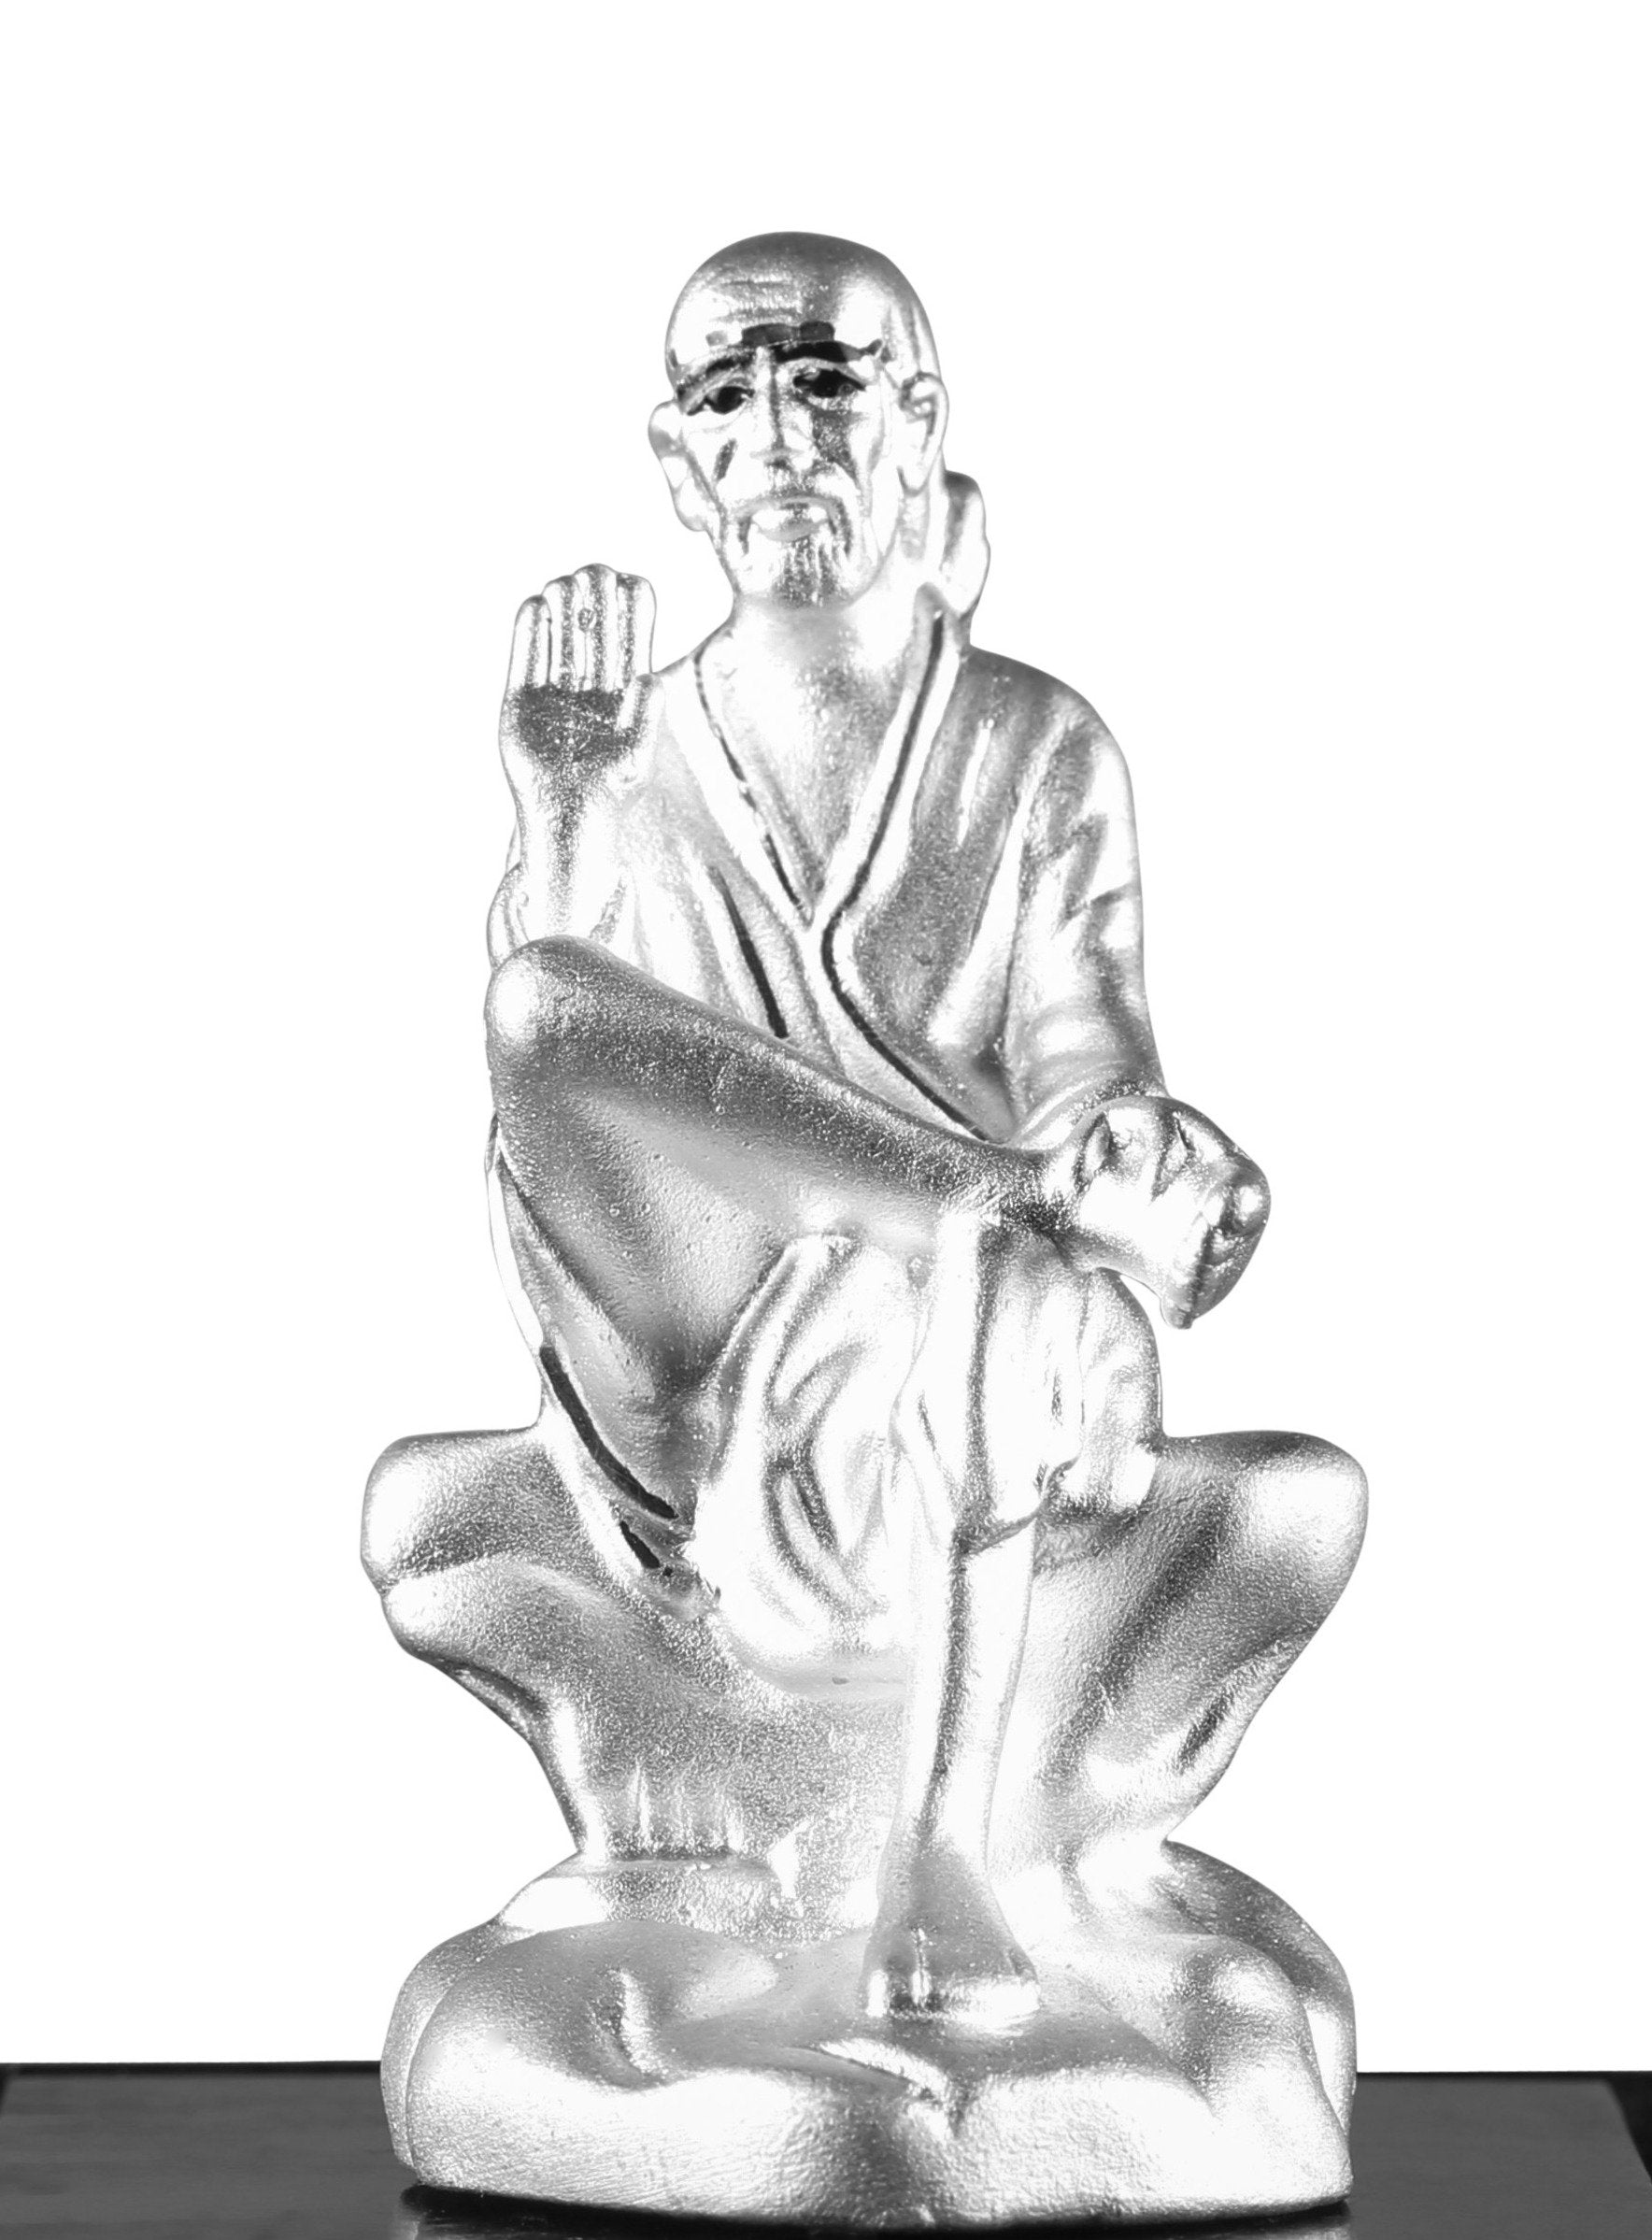 999 Pure Silver Sai Baba Idol By Krysaliis Isvara Idols